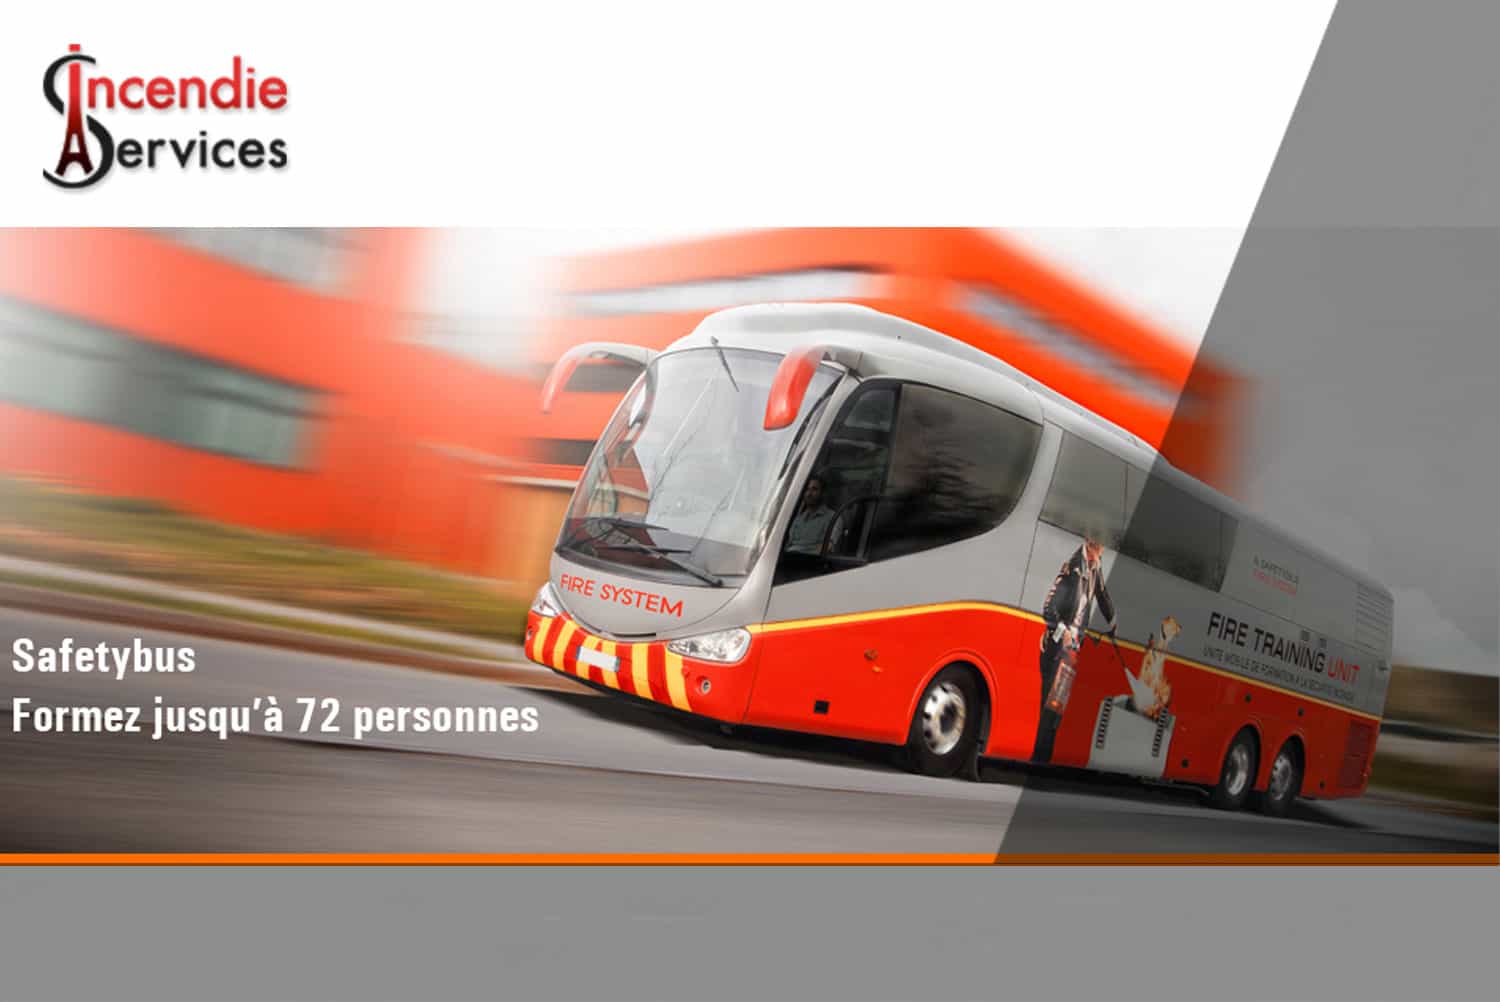 Tarifs/Infos - Bus Formation Incendie - SAFETYBUS | PFI Formation - Organisme de Formation Agrée - "bus formation incendie" - "safetybus"